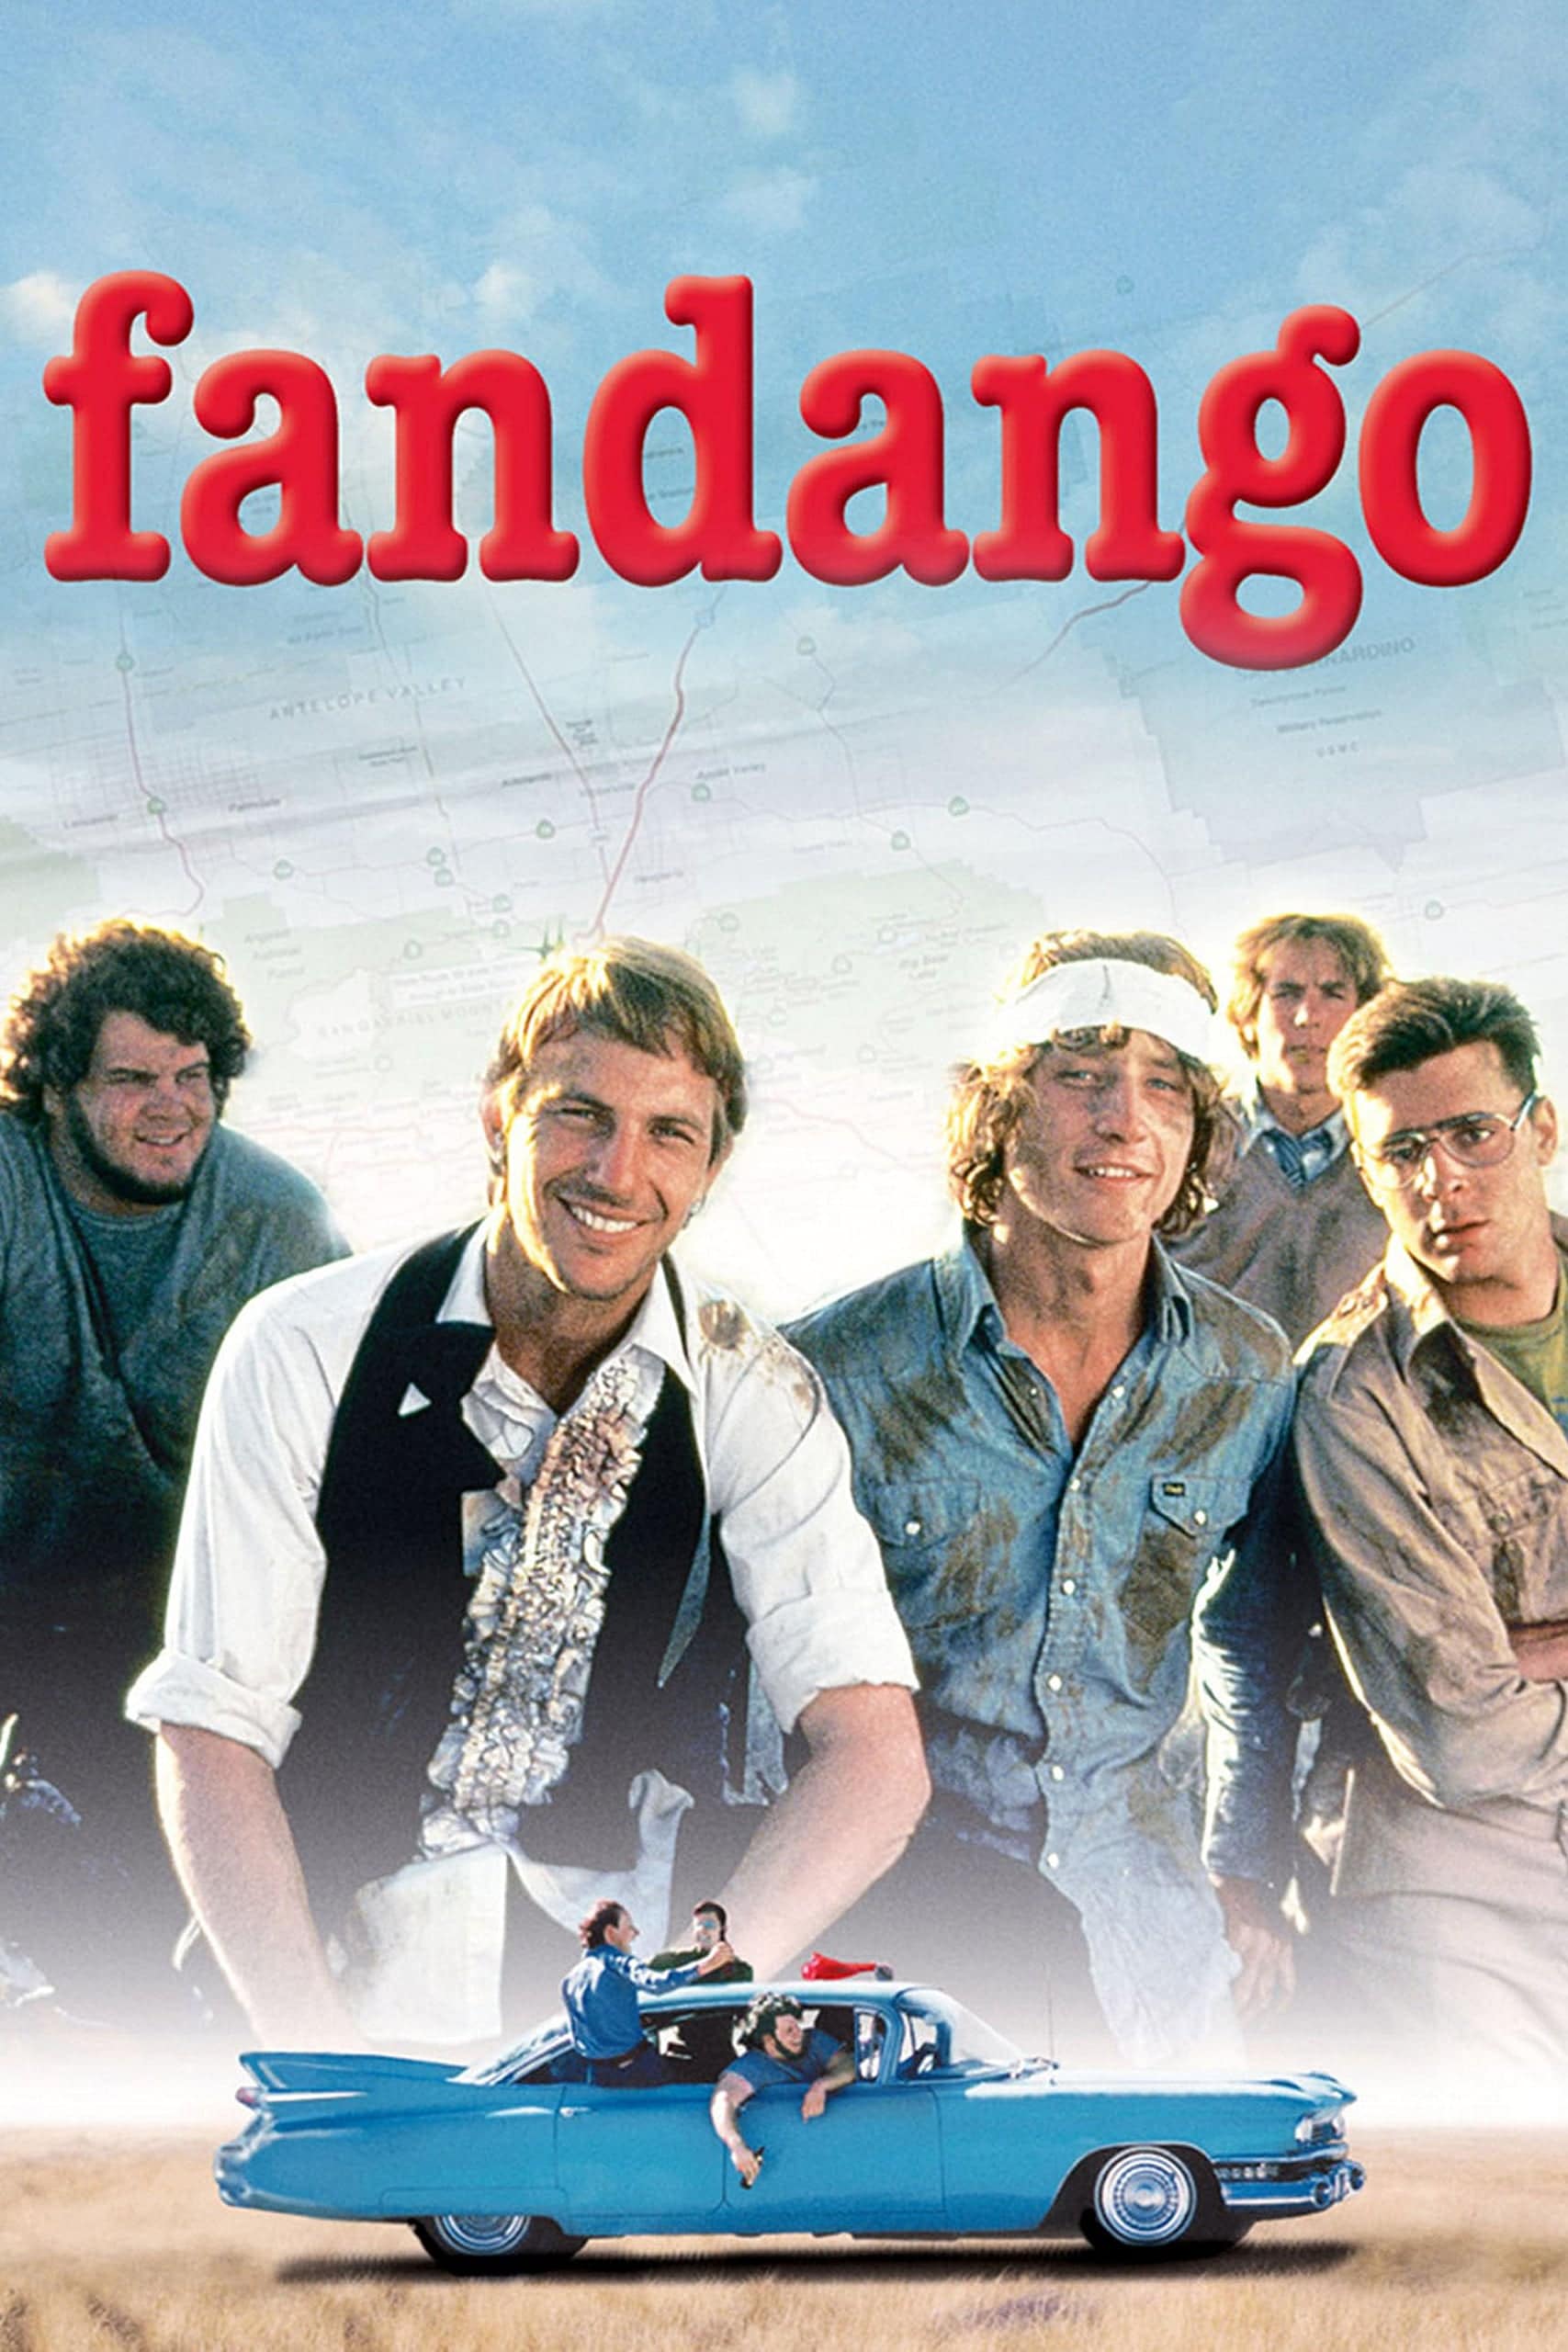 Plakat von "Fandango"